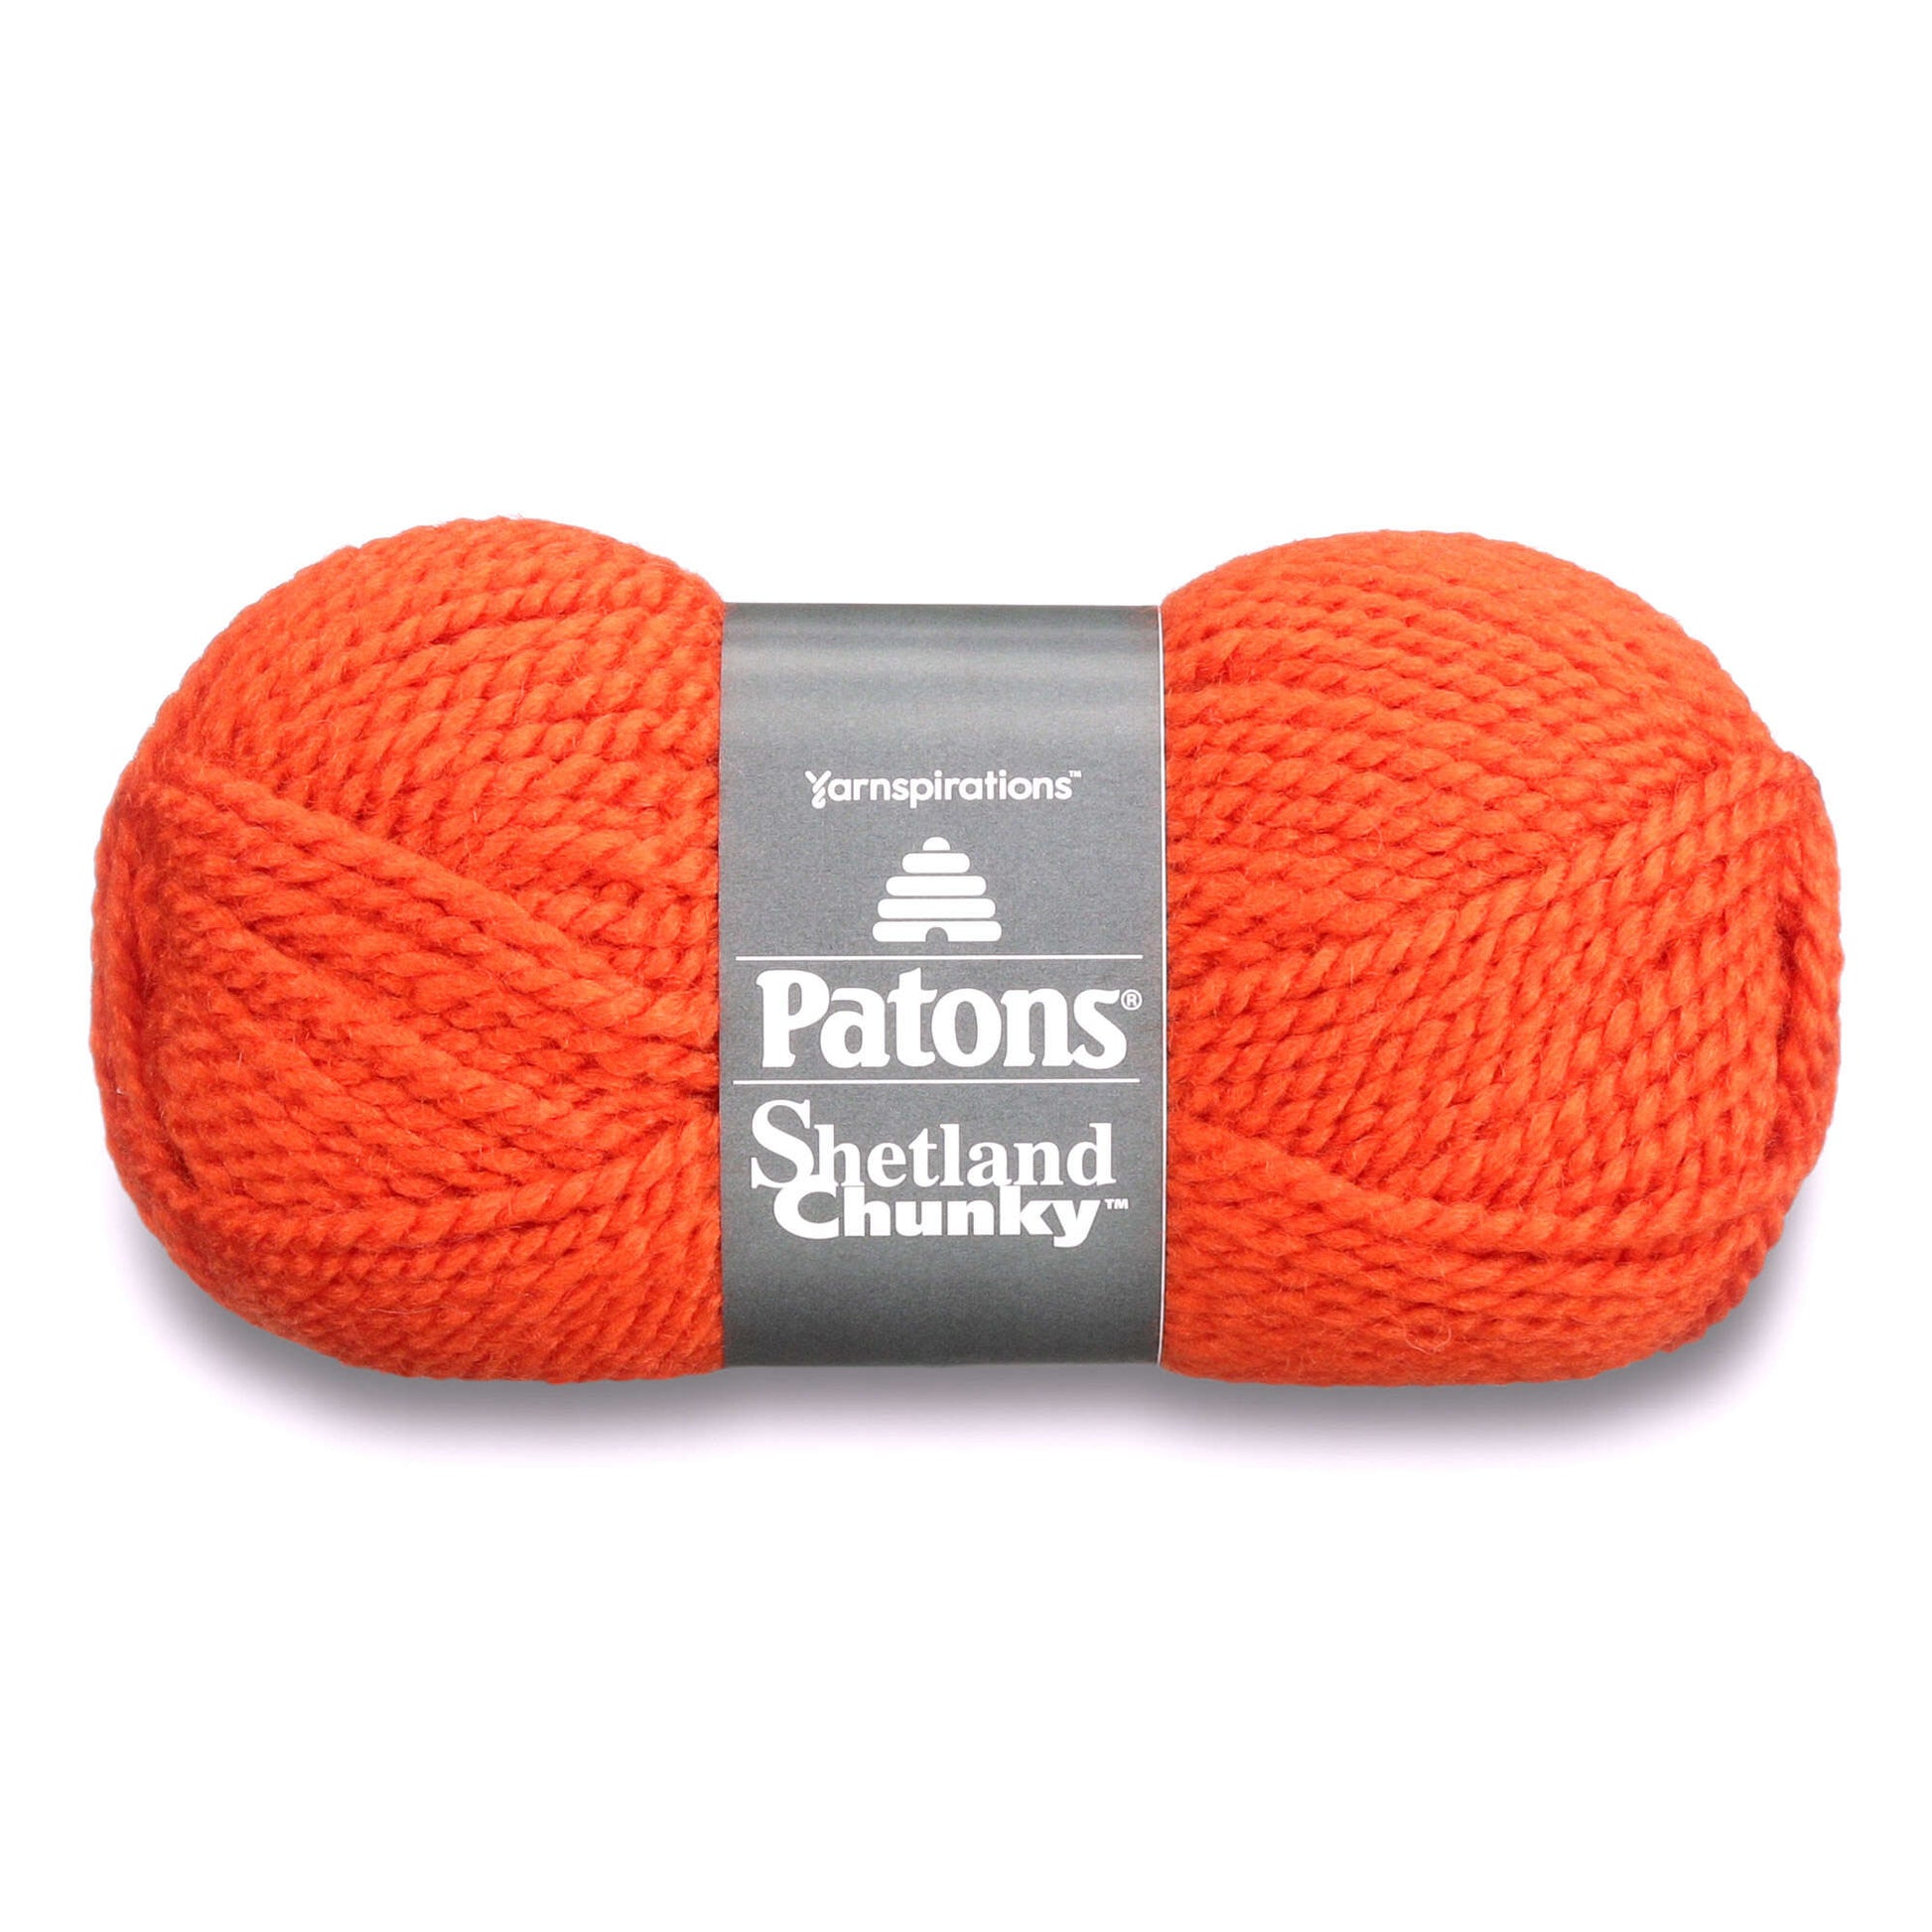 Patons Shetland Chunky Yarn - Clearance Shades*